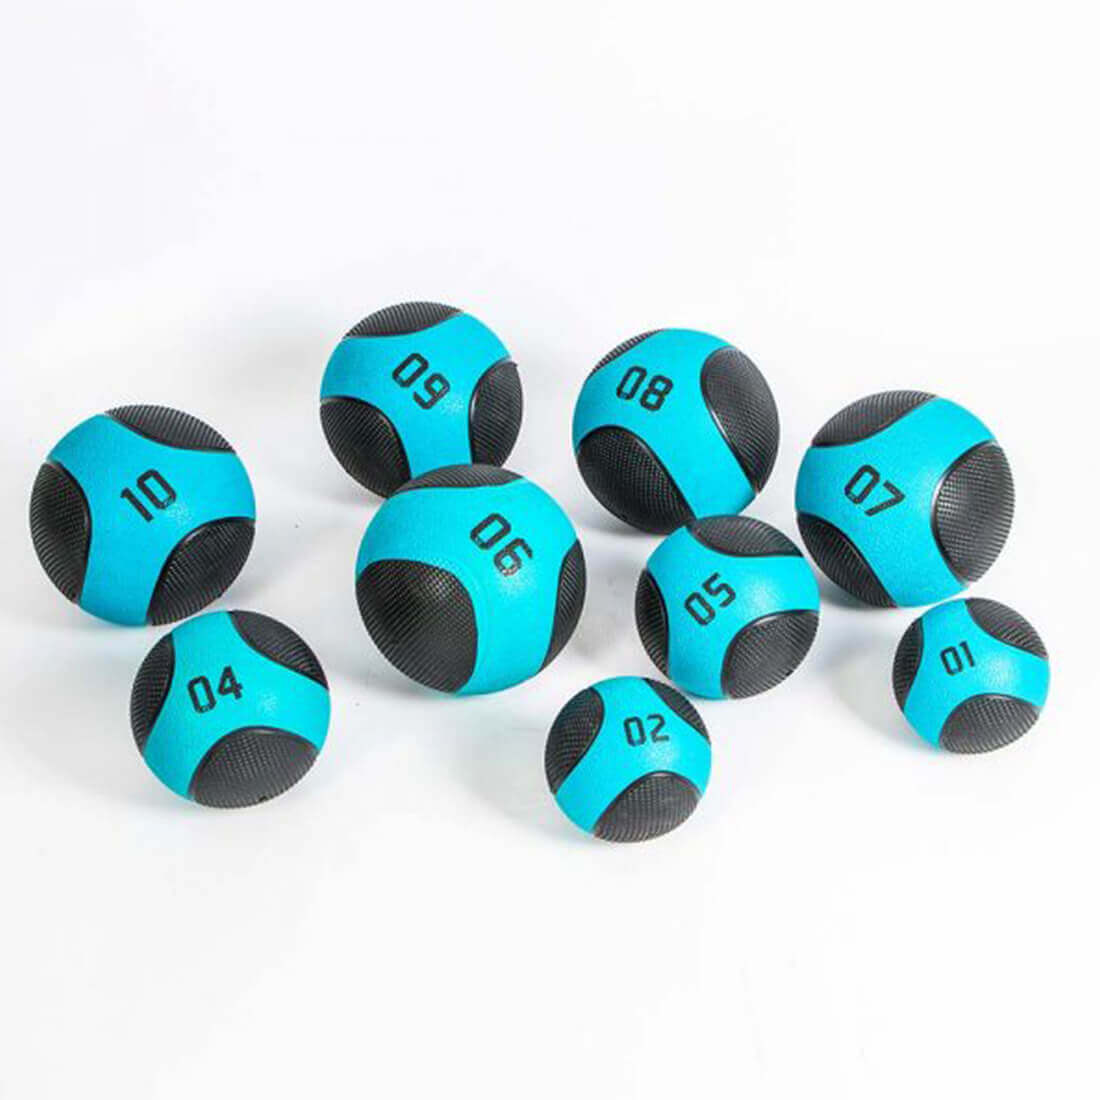 Solid Colored Medicine Balls Set